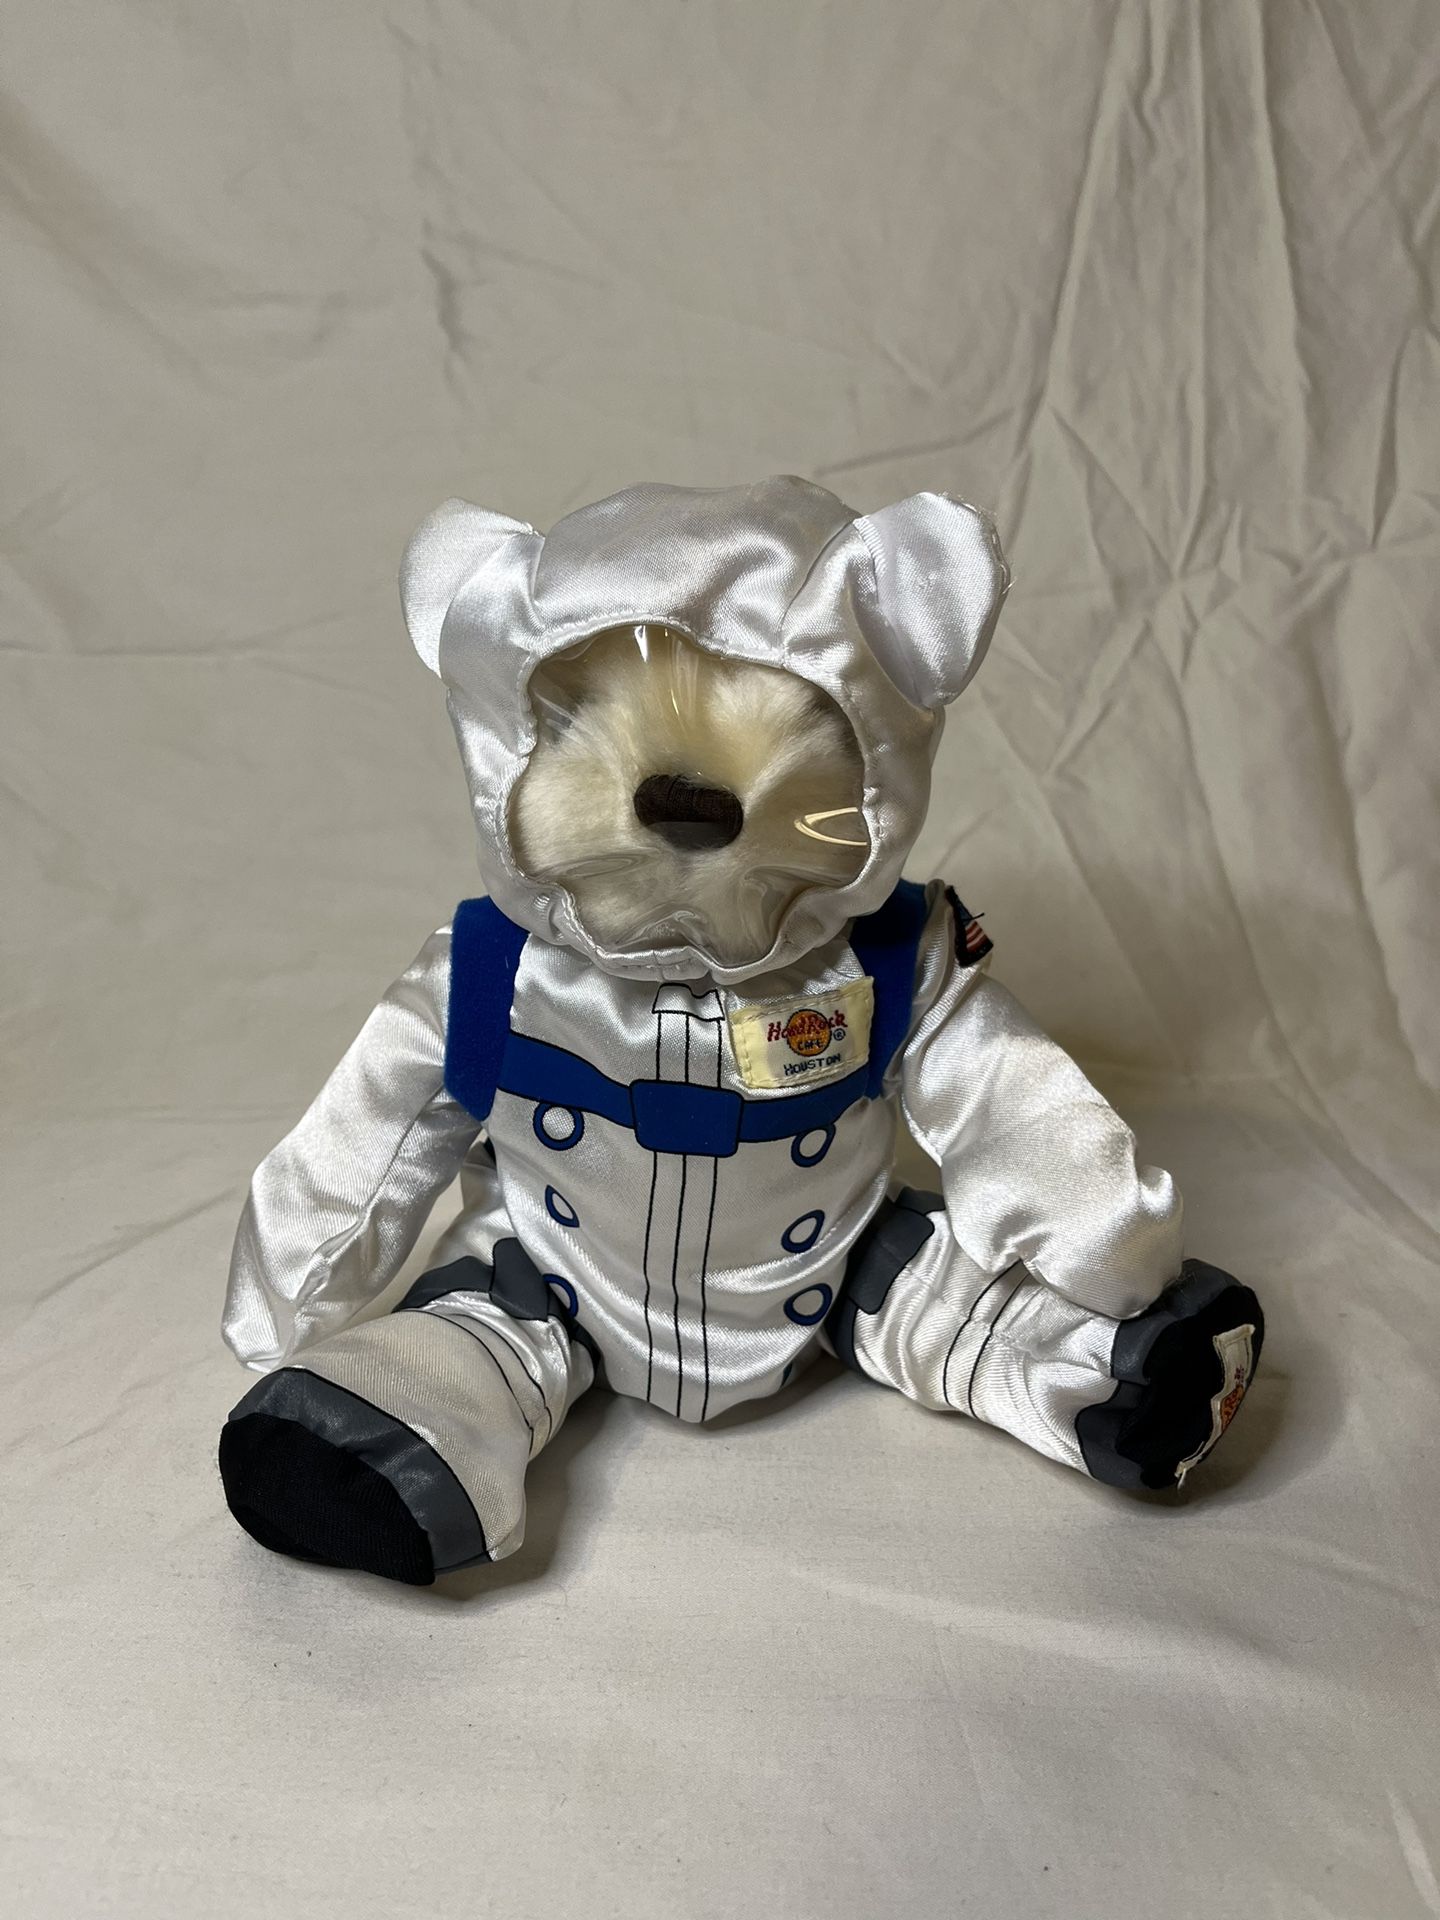 Hard Rock Cafe Bear Collectible “Houston” Astronaut